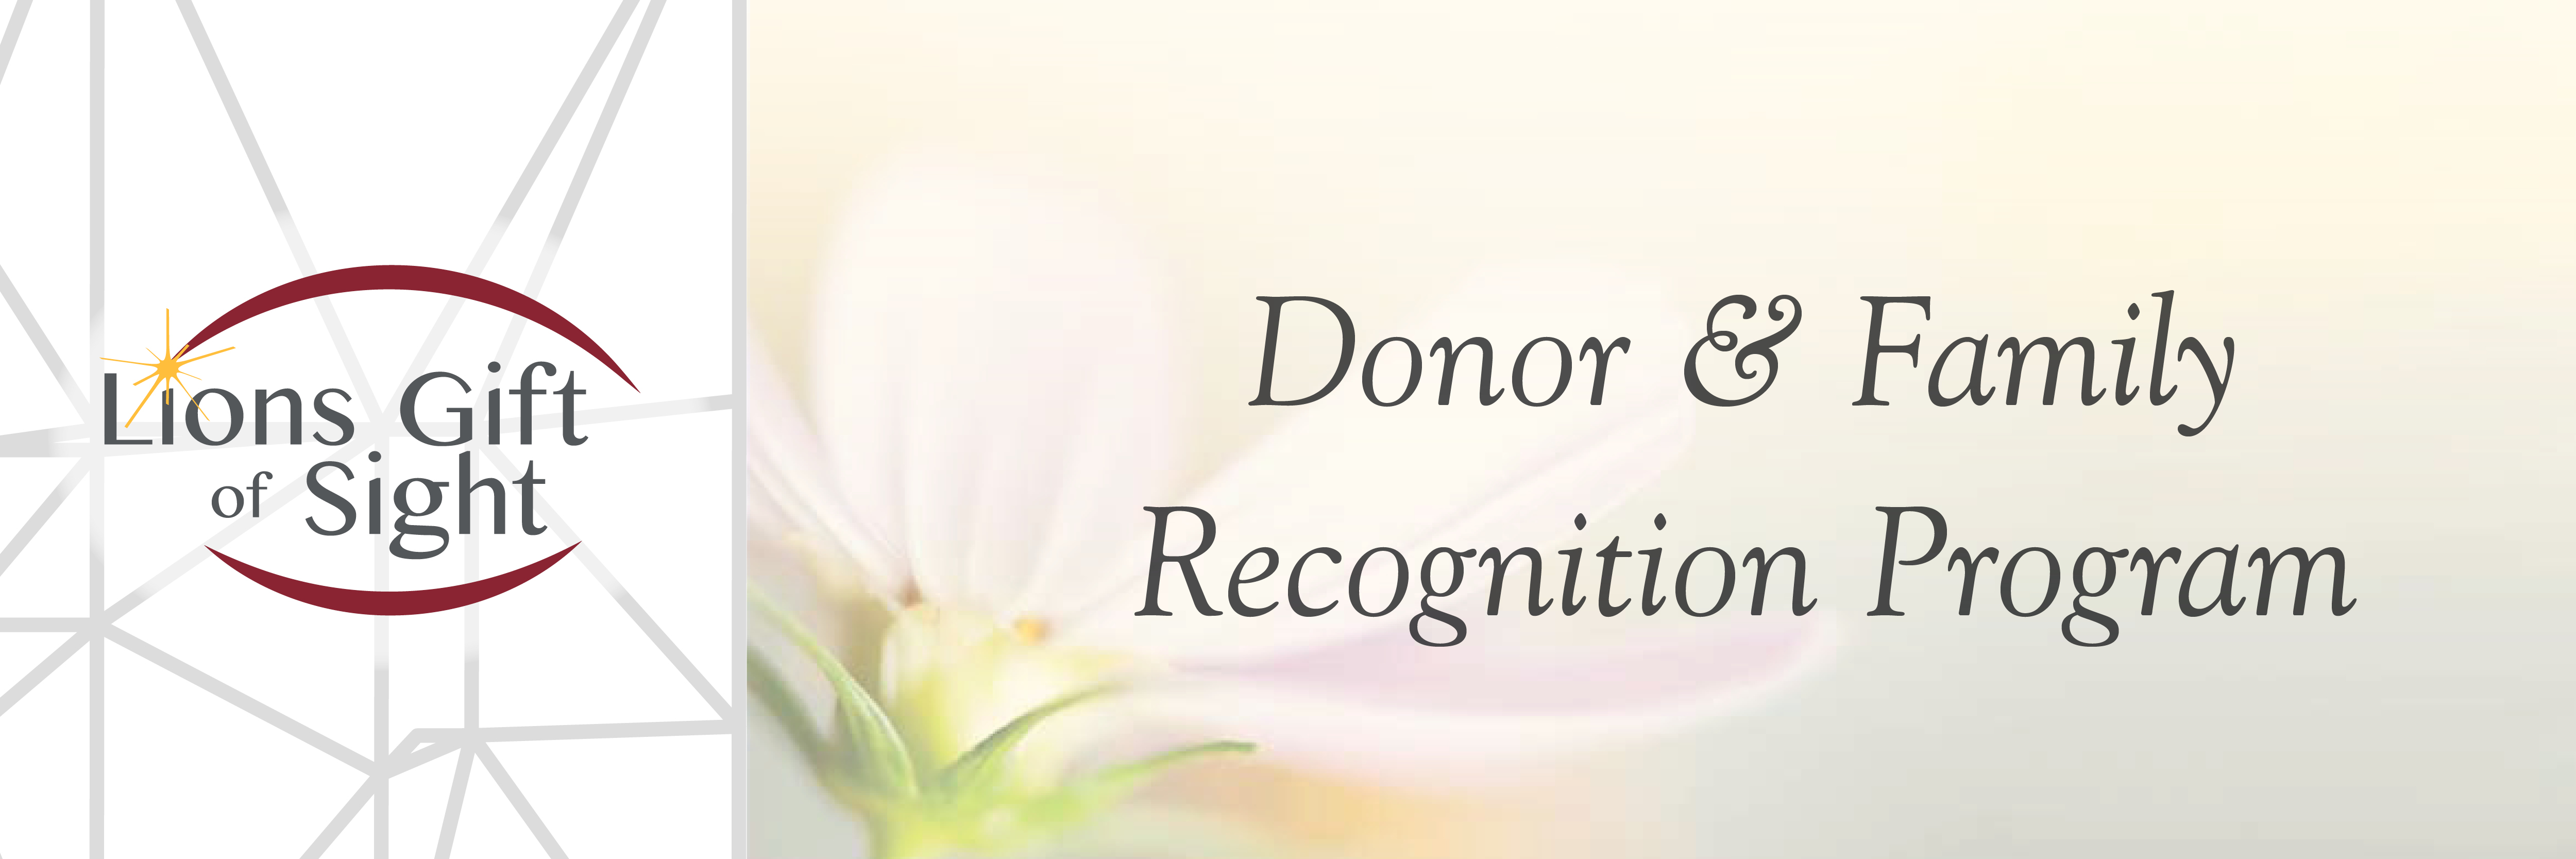 Donor Recognition Program header